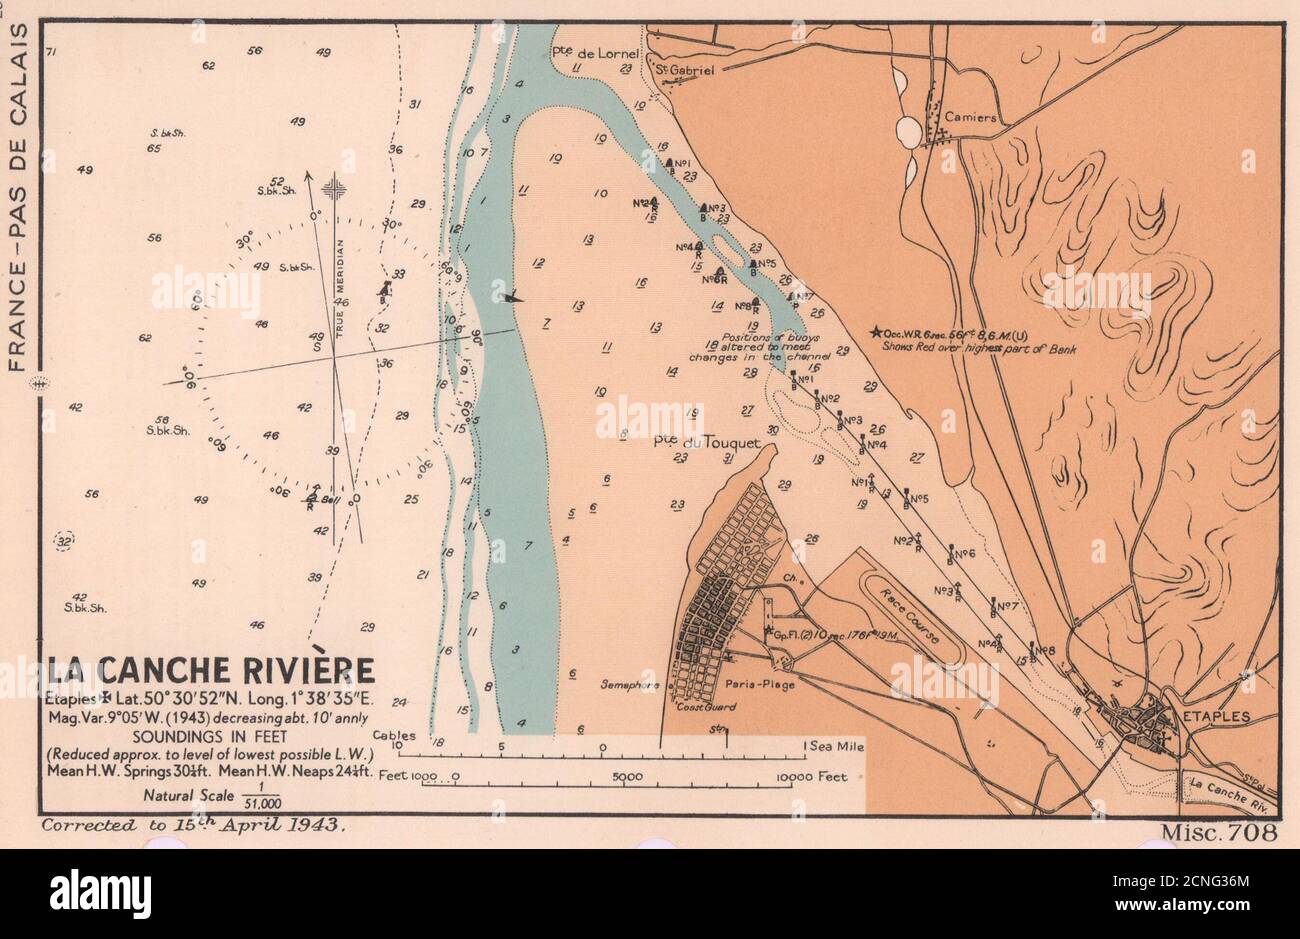 La Canche Rivière Étaples plan/sea coast chart D-Day planning map ADMIRALTY 1943 Stock Photo